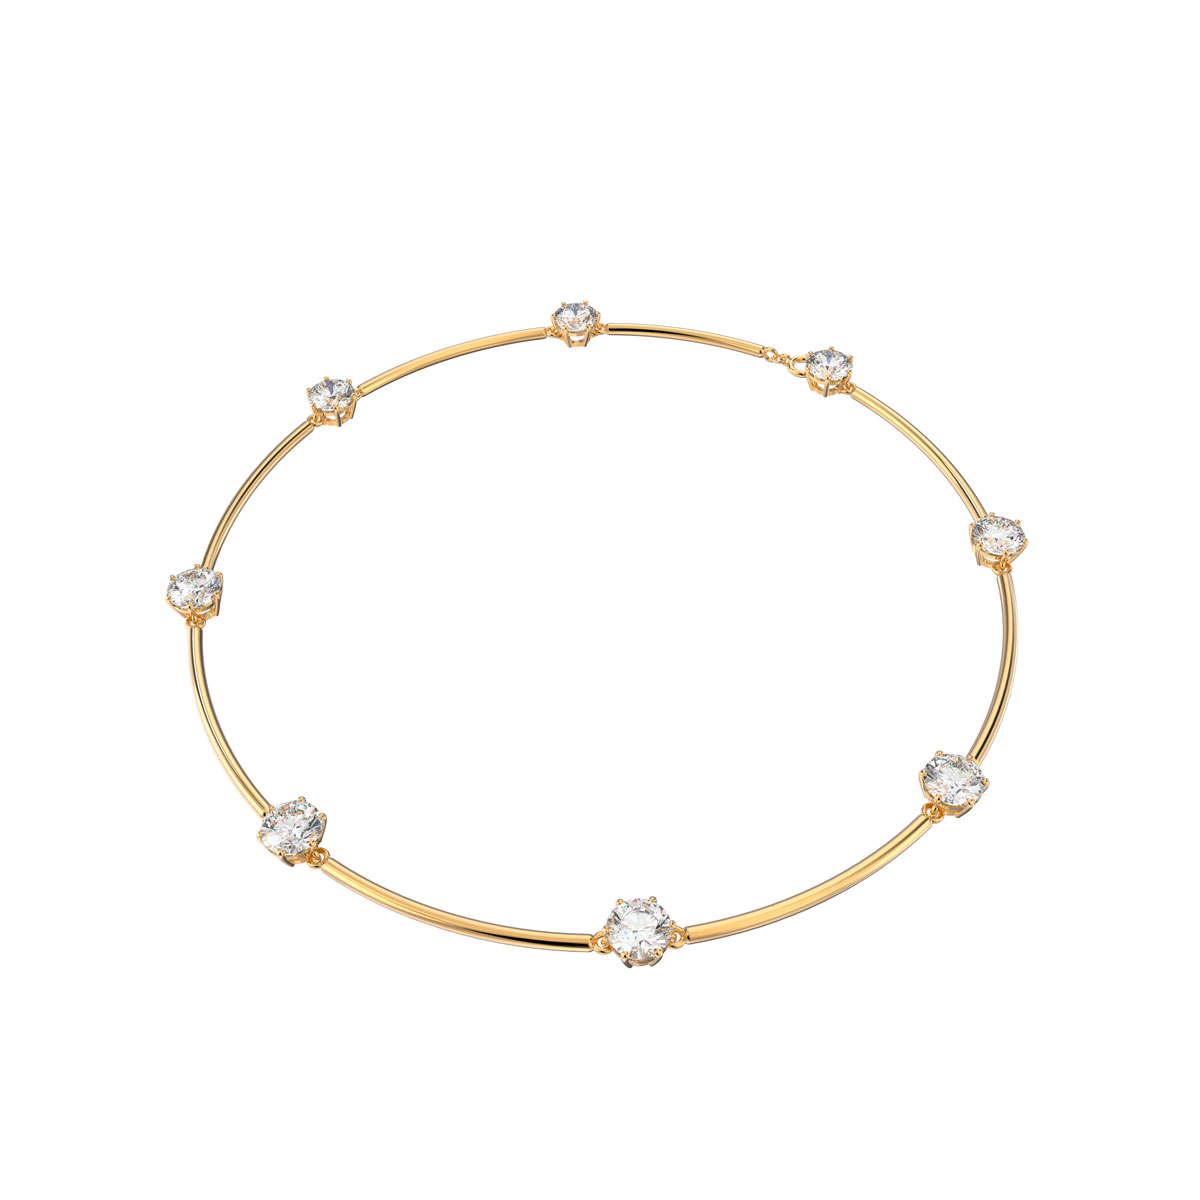 Swarovski Crystal and Shiny Gold Constella Necklace